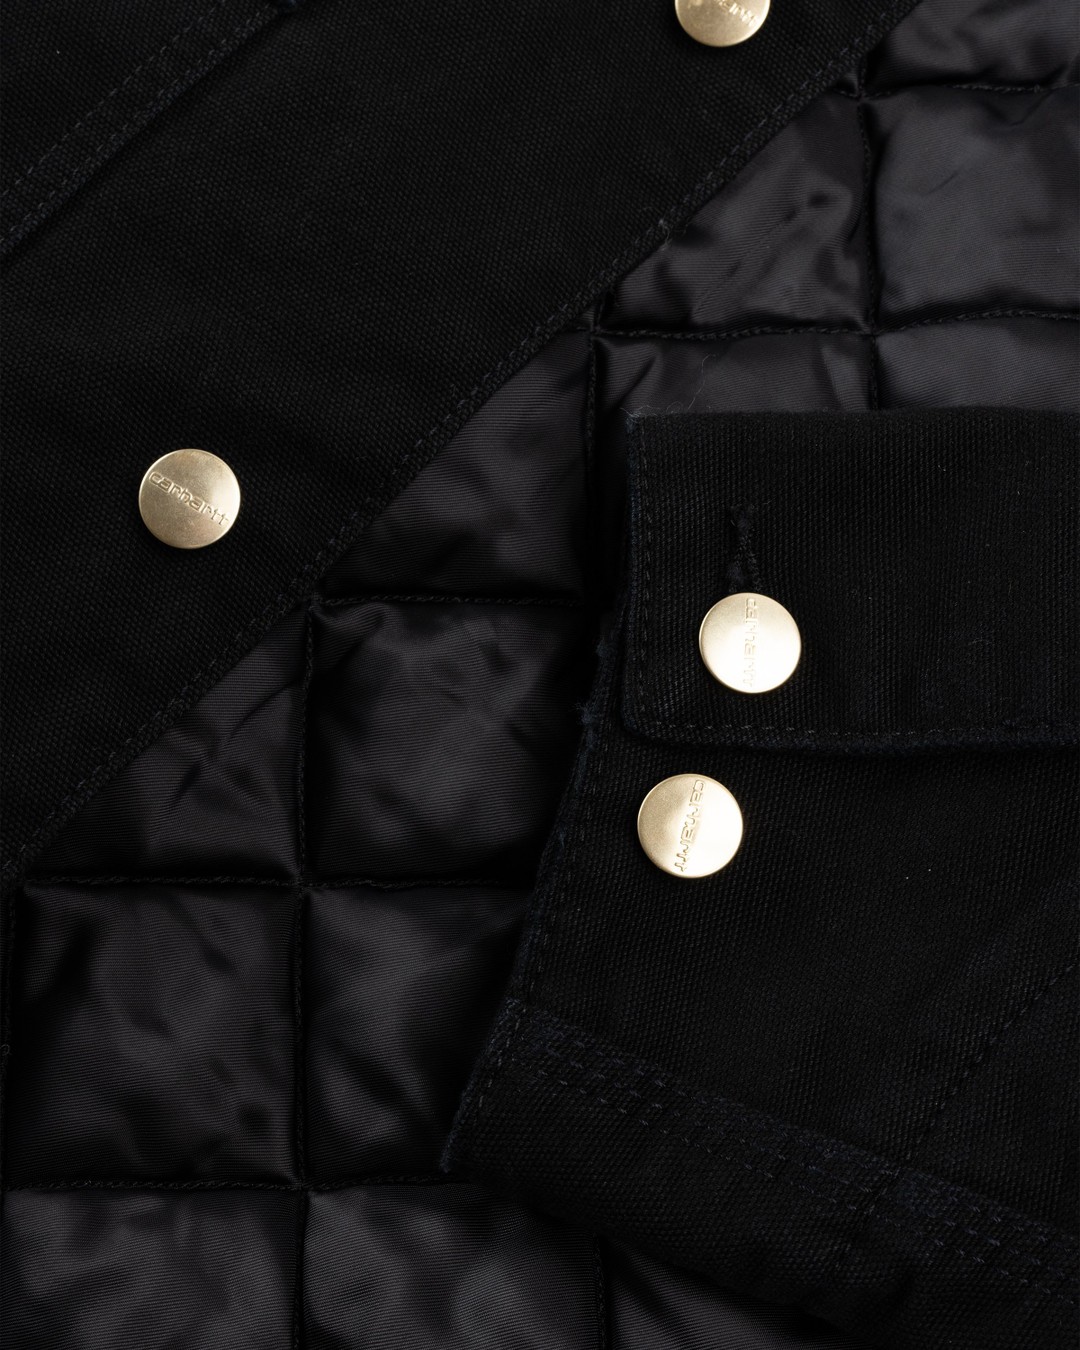 Carhartt WIP – OG Chore Coat Black/Aged Canvas - Outerwear - Black - Image 6